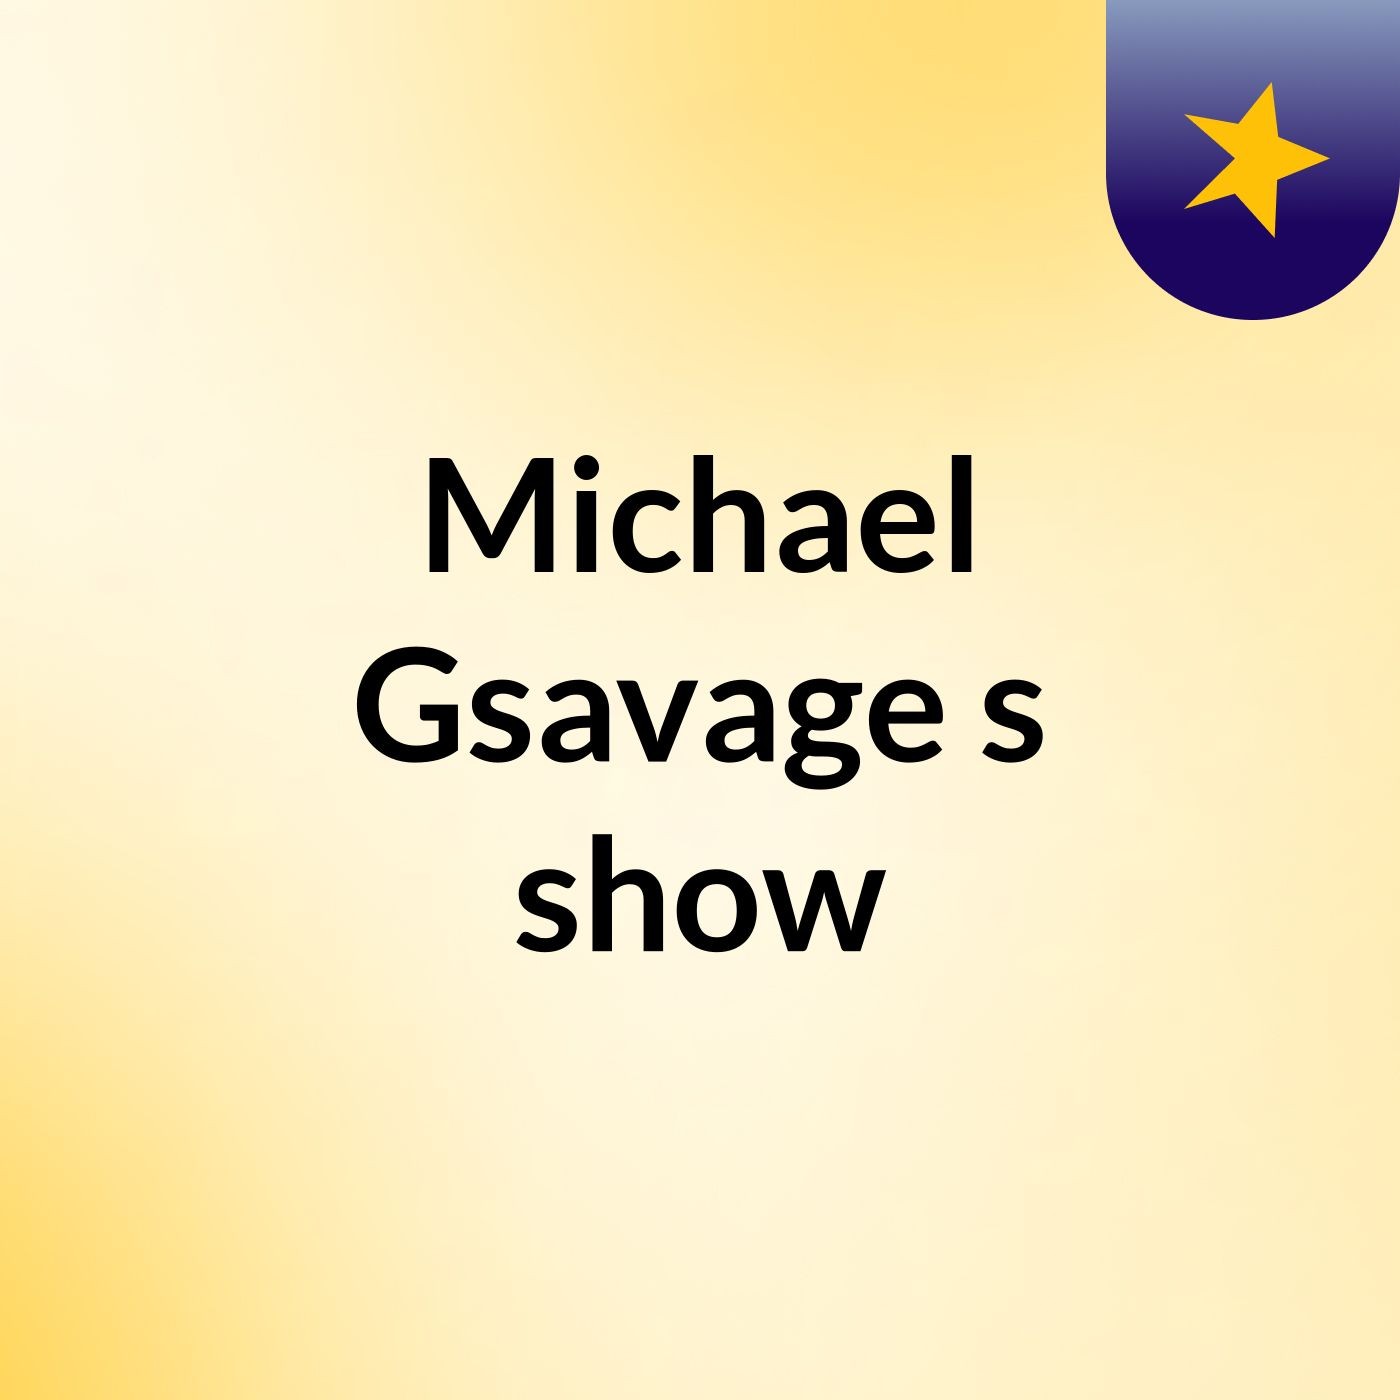 Michael Gsavage's show